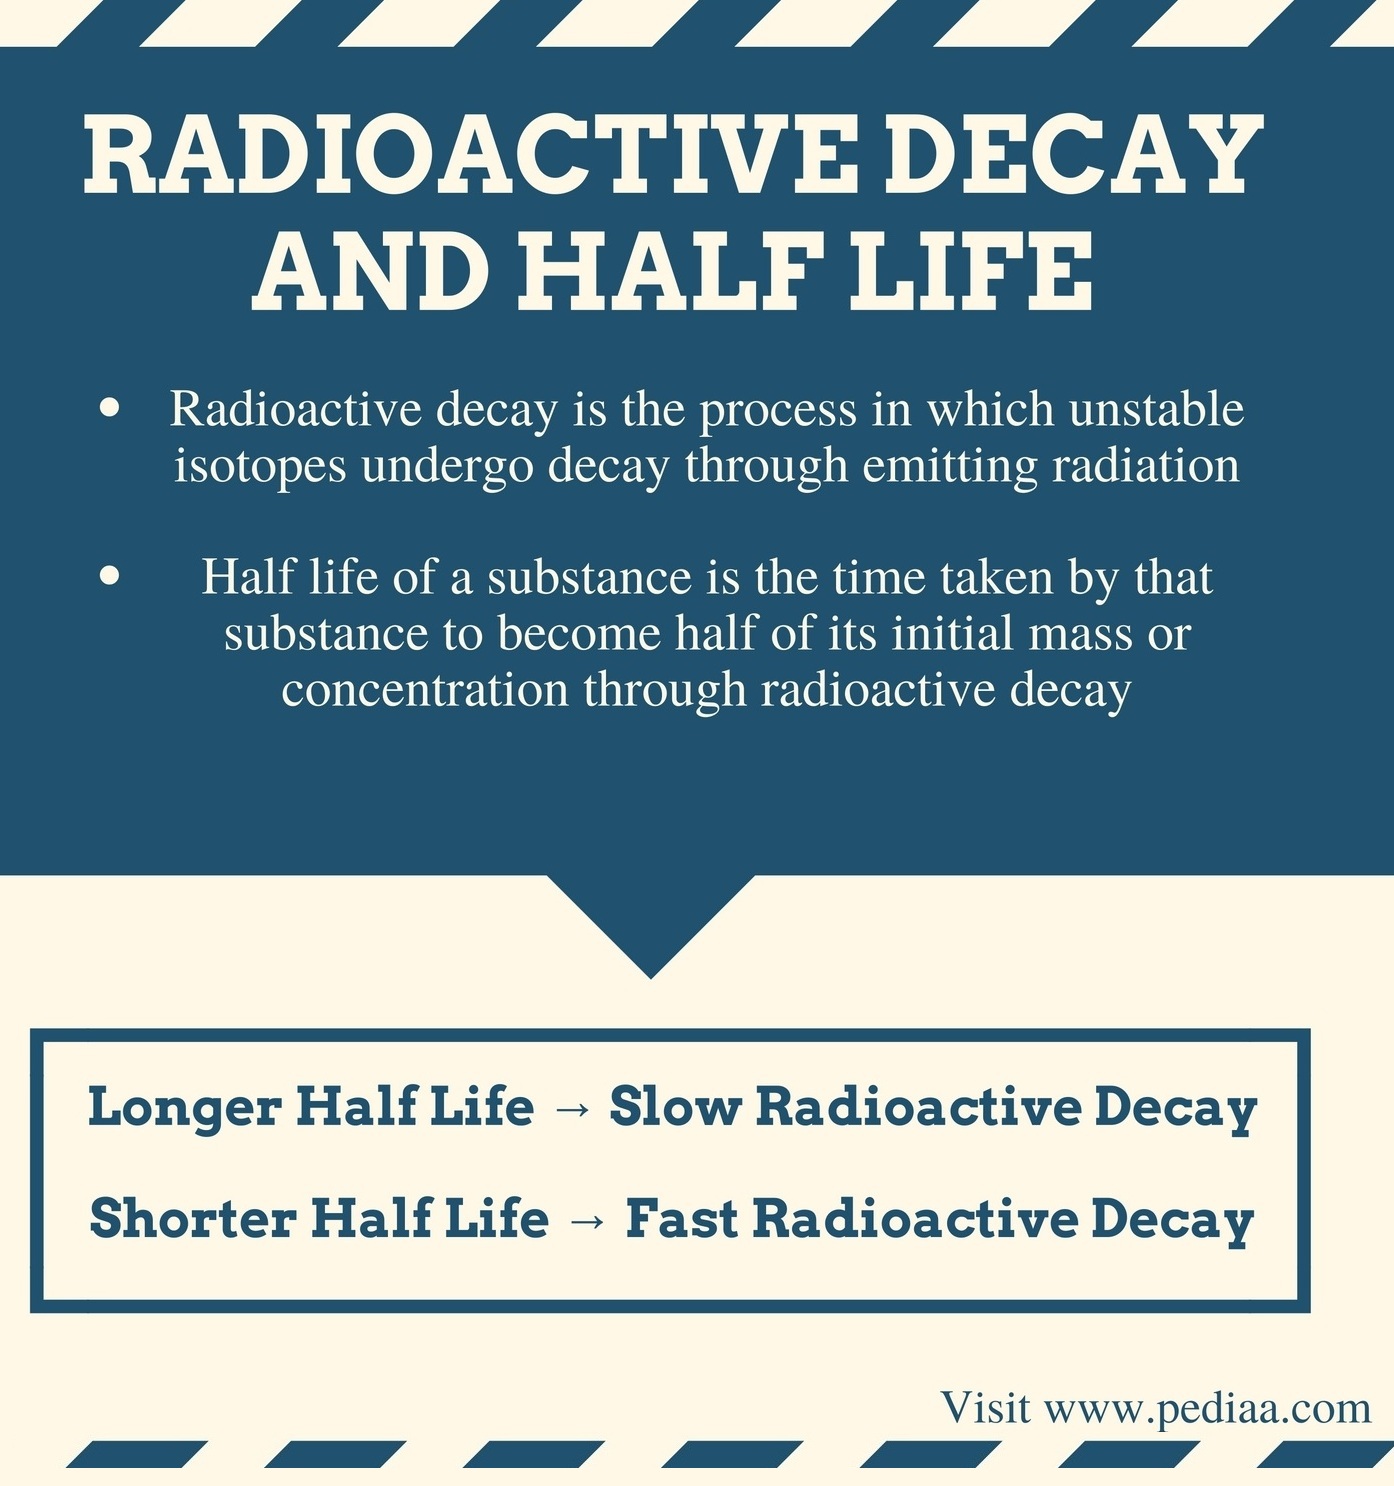 Relationship Between Radioactive Decay and Half Life - Summary